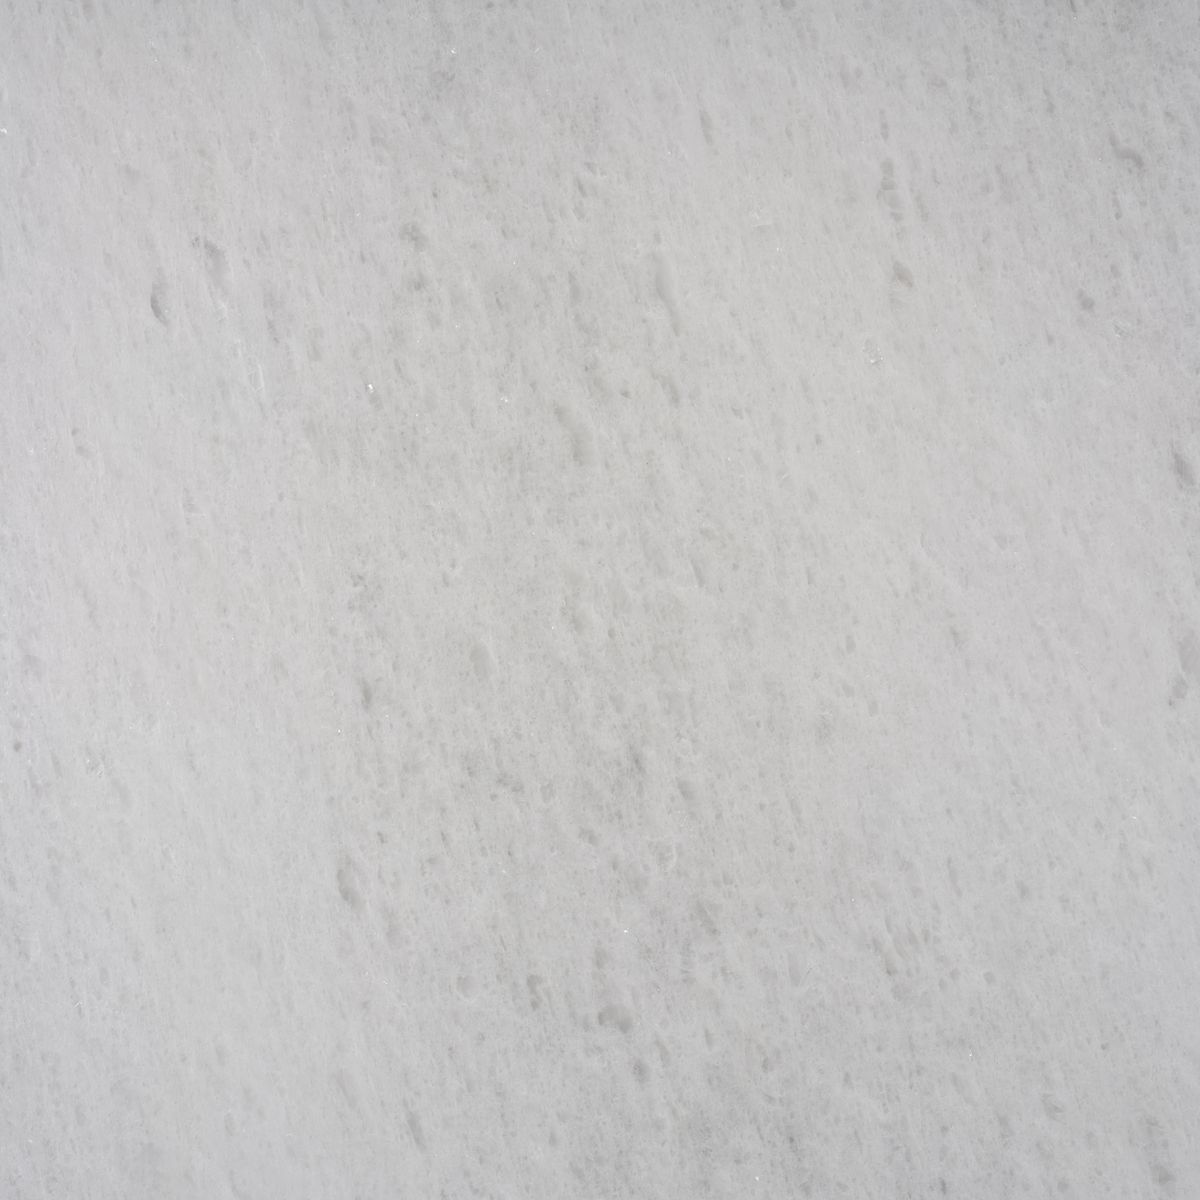 bianco neve - bianco v - snow white marmor